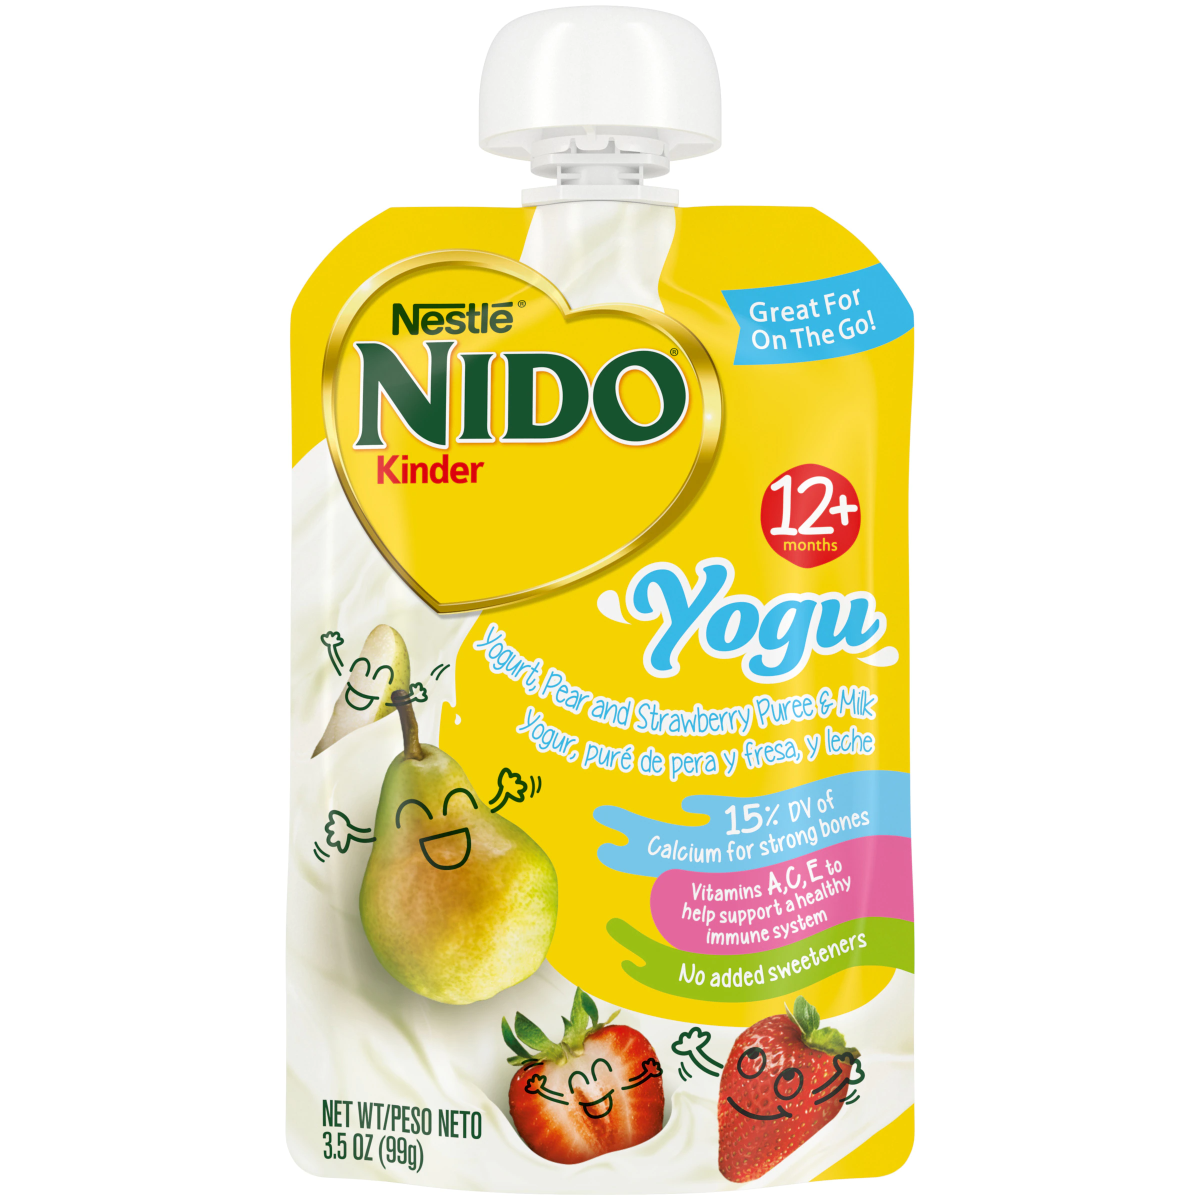 Nido Kinder Yogurt, Pear and Strawberry Puree & Milk 99g